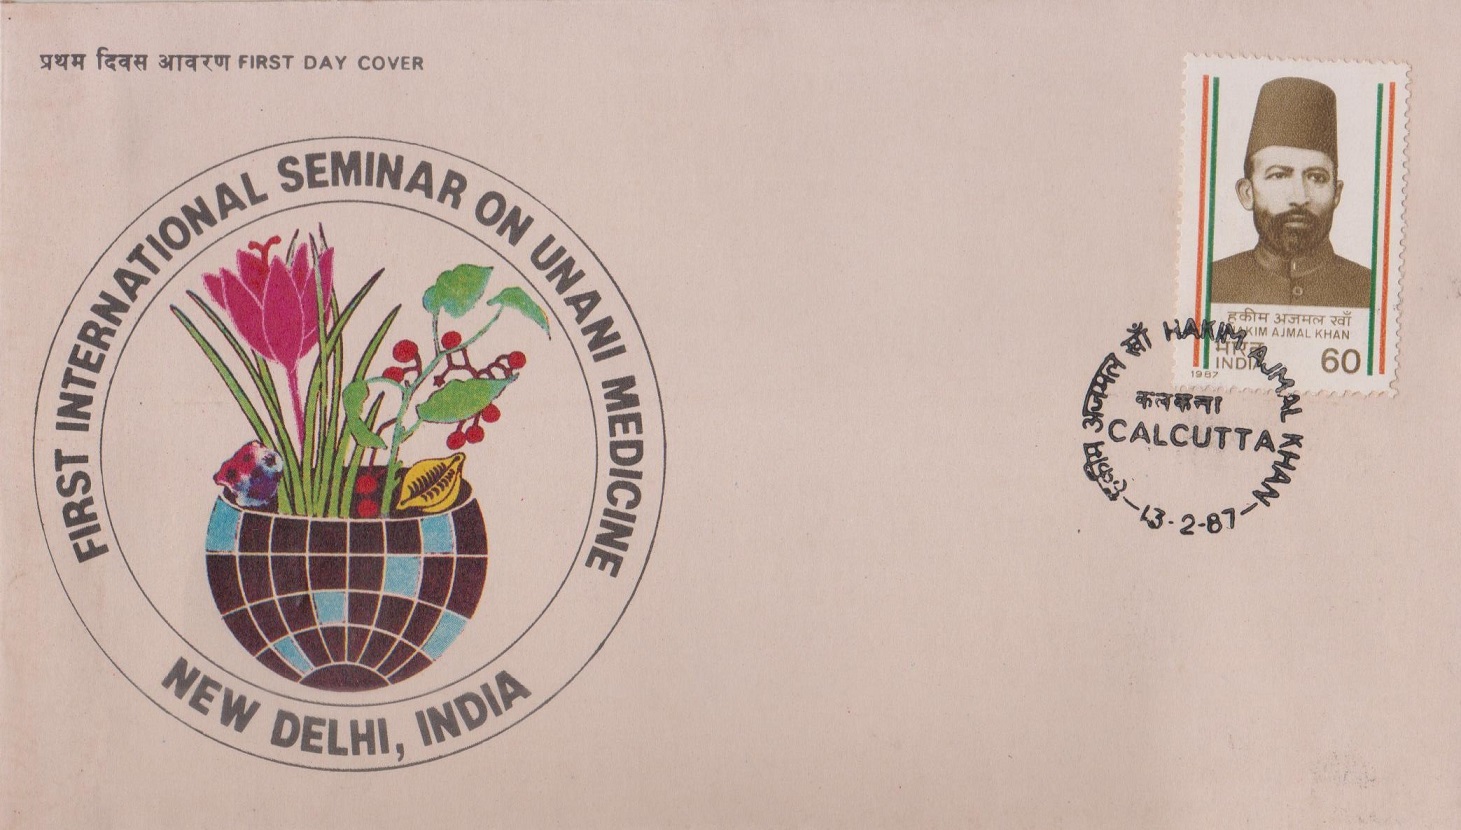 First International Seminar on Unani Medicine, New Delhi, India